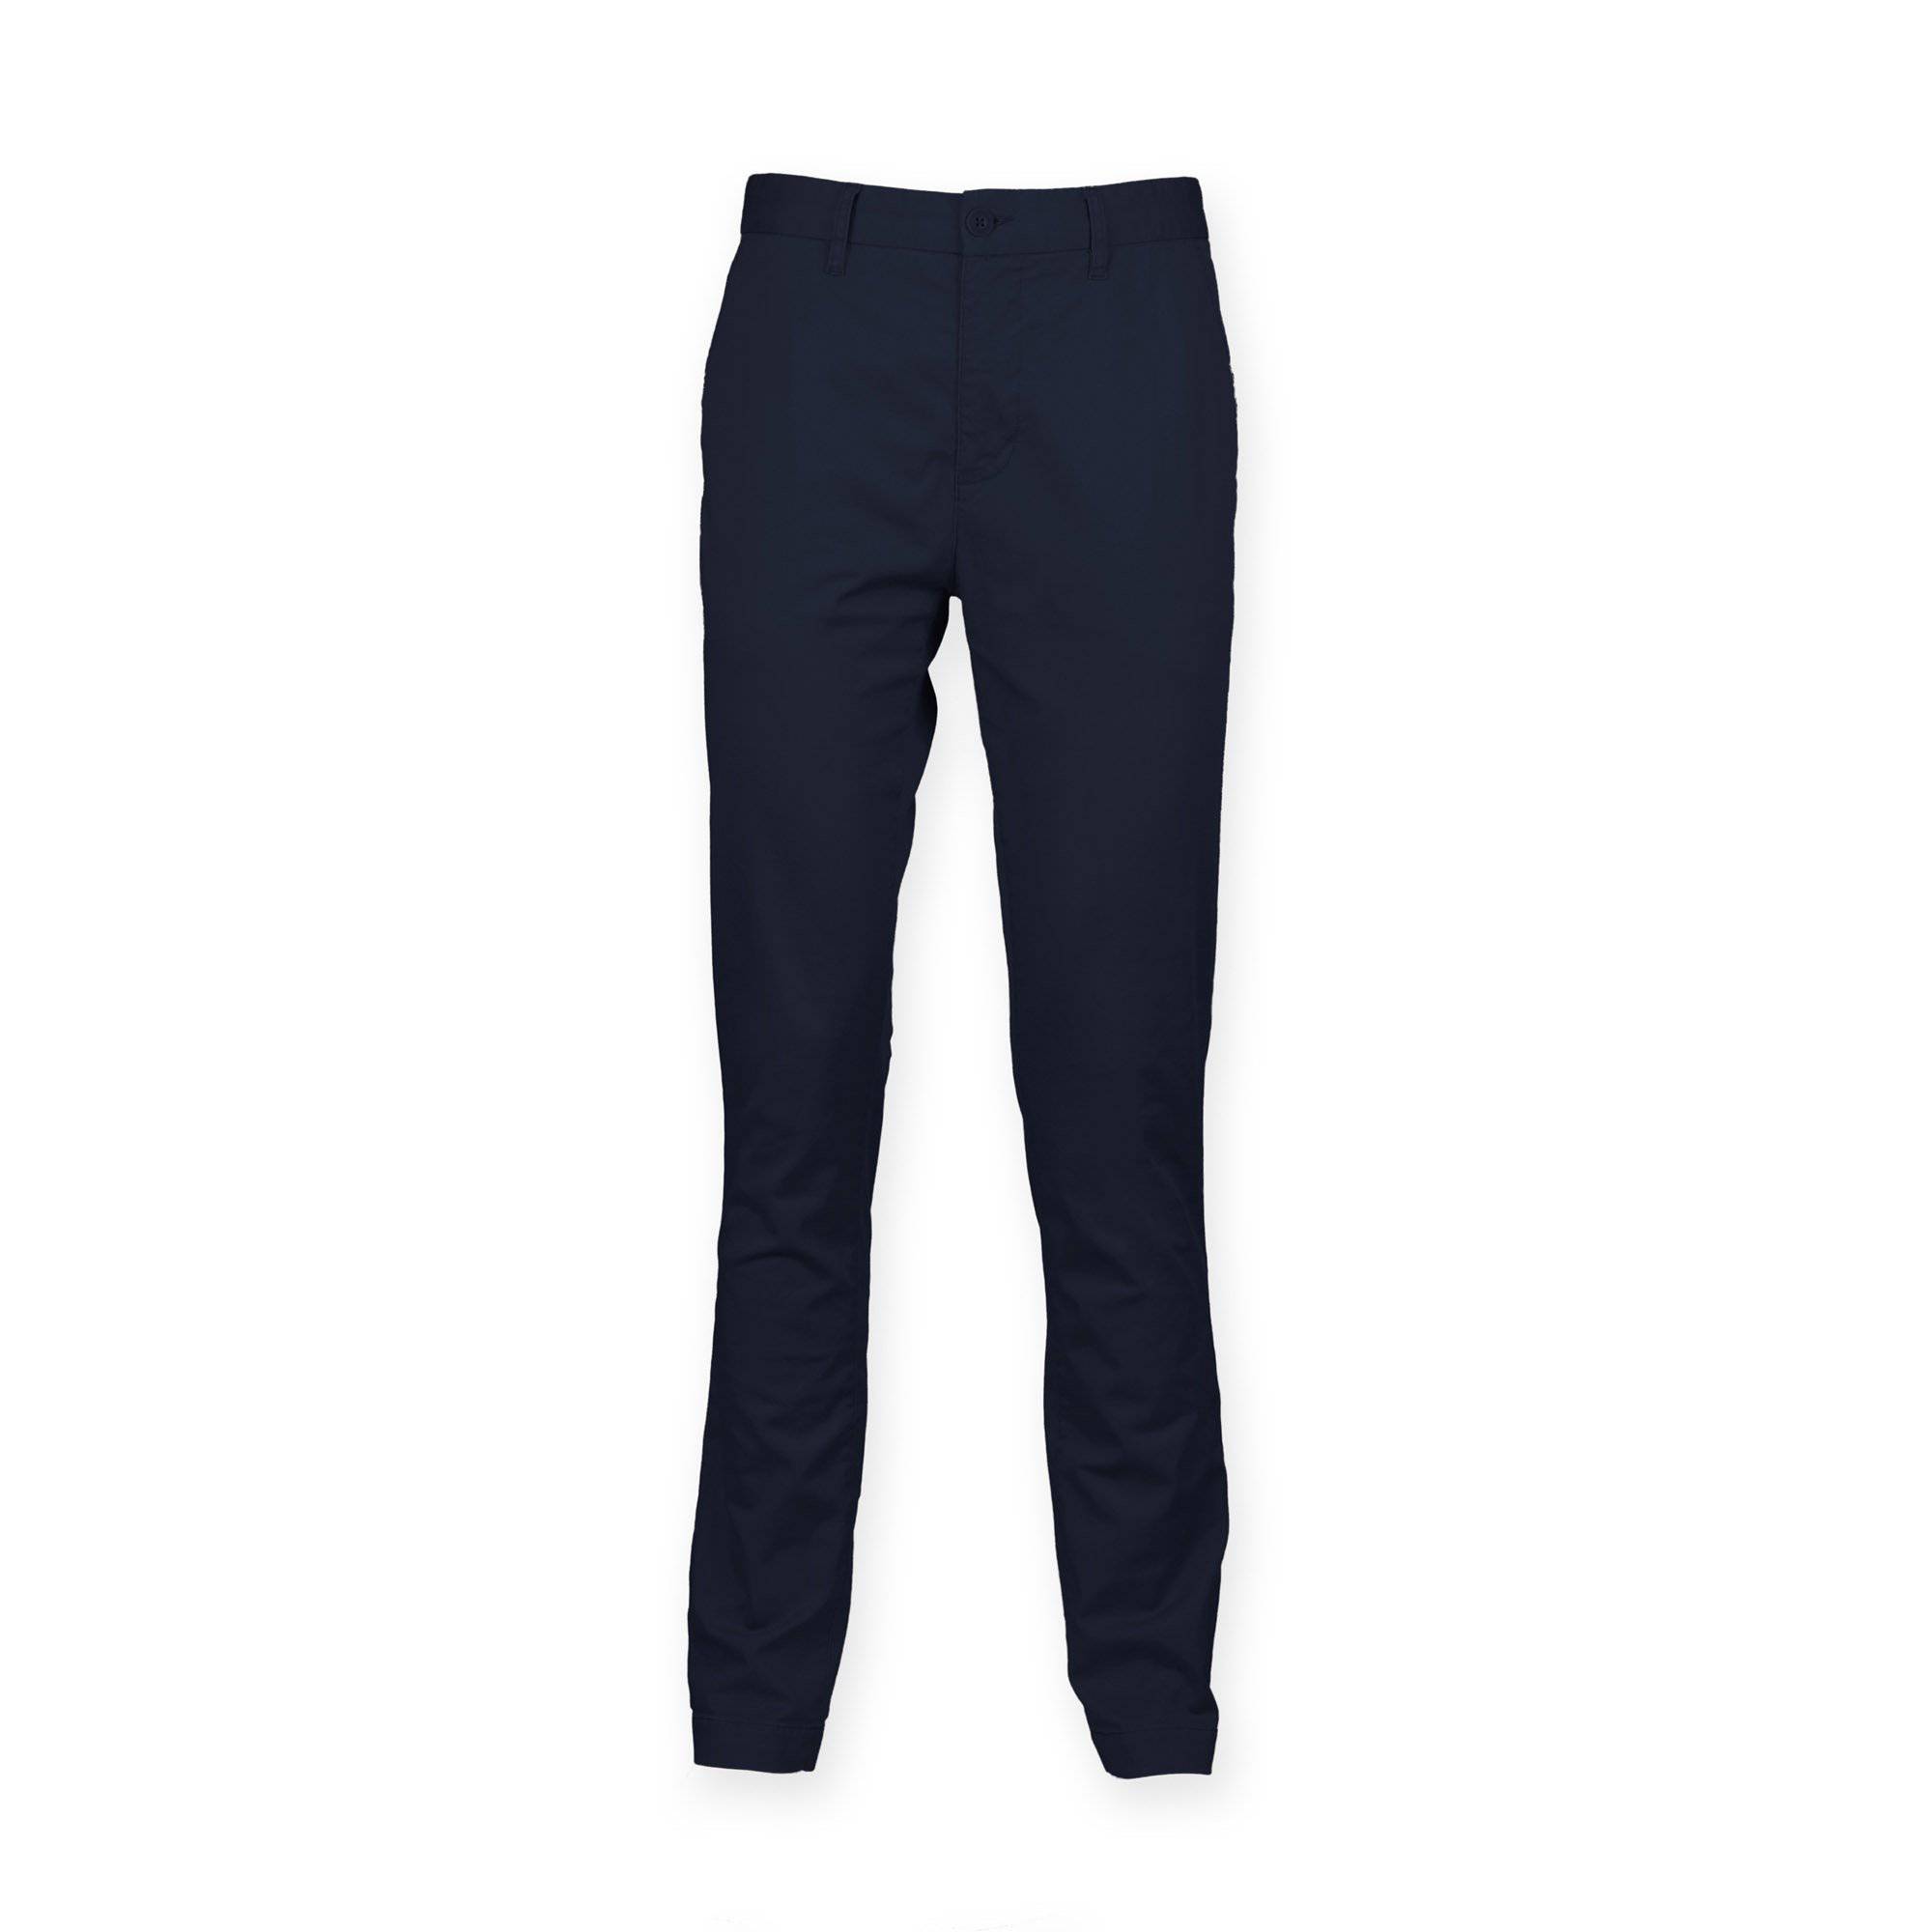 Men's Slim Fit Tech Chino Pants - Goodfellow & Co™ : Target